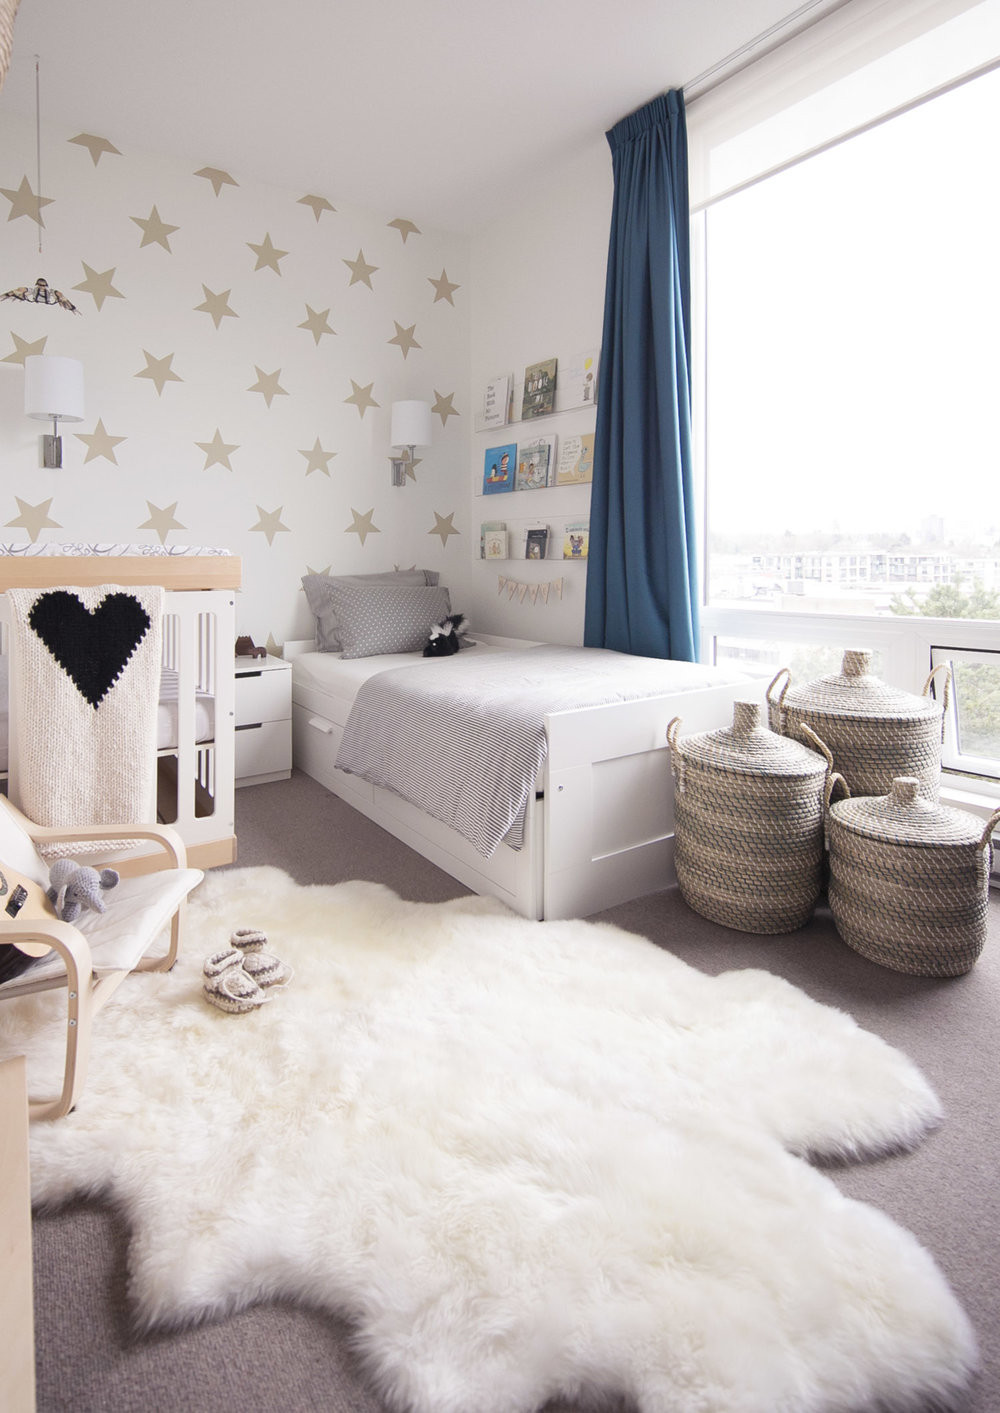 Sharing A Room With Baby Decorating Ideas
 RAFA LEO S SHARED BABY & TODDLER ROOM — WINTER DAISY